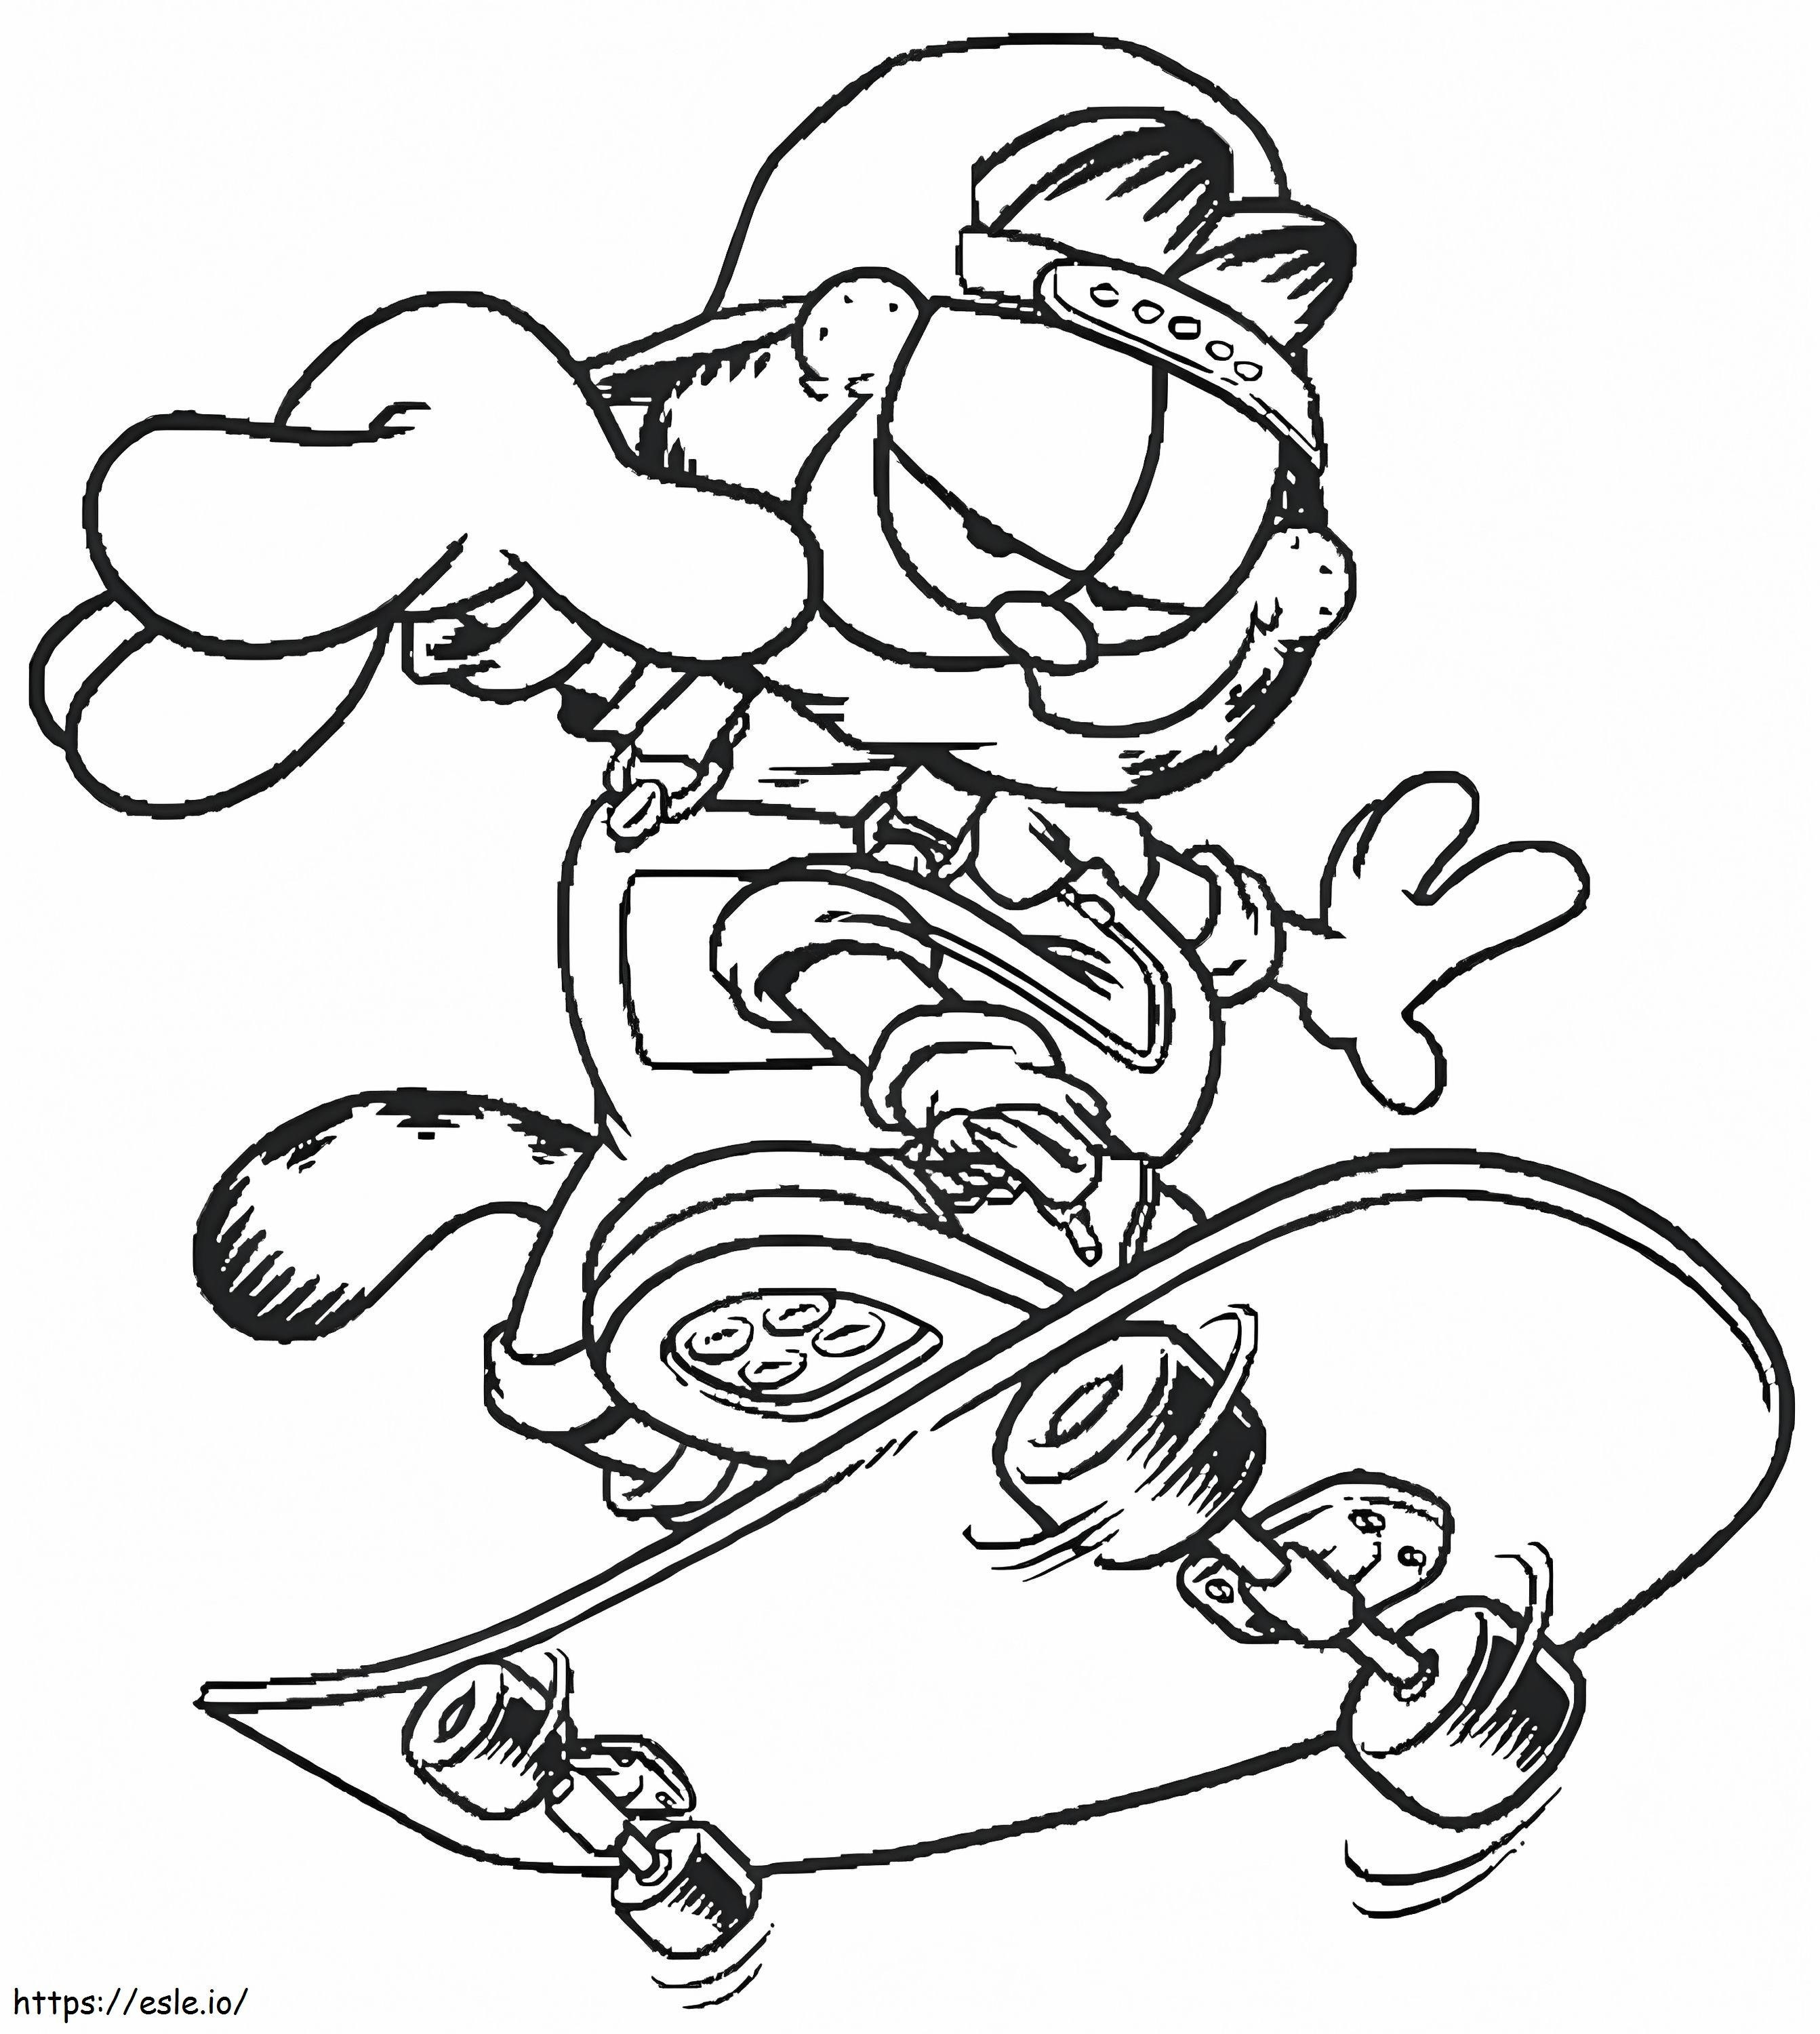 Garfield Monoskate coloring page